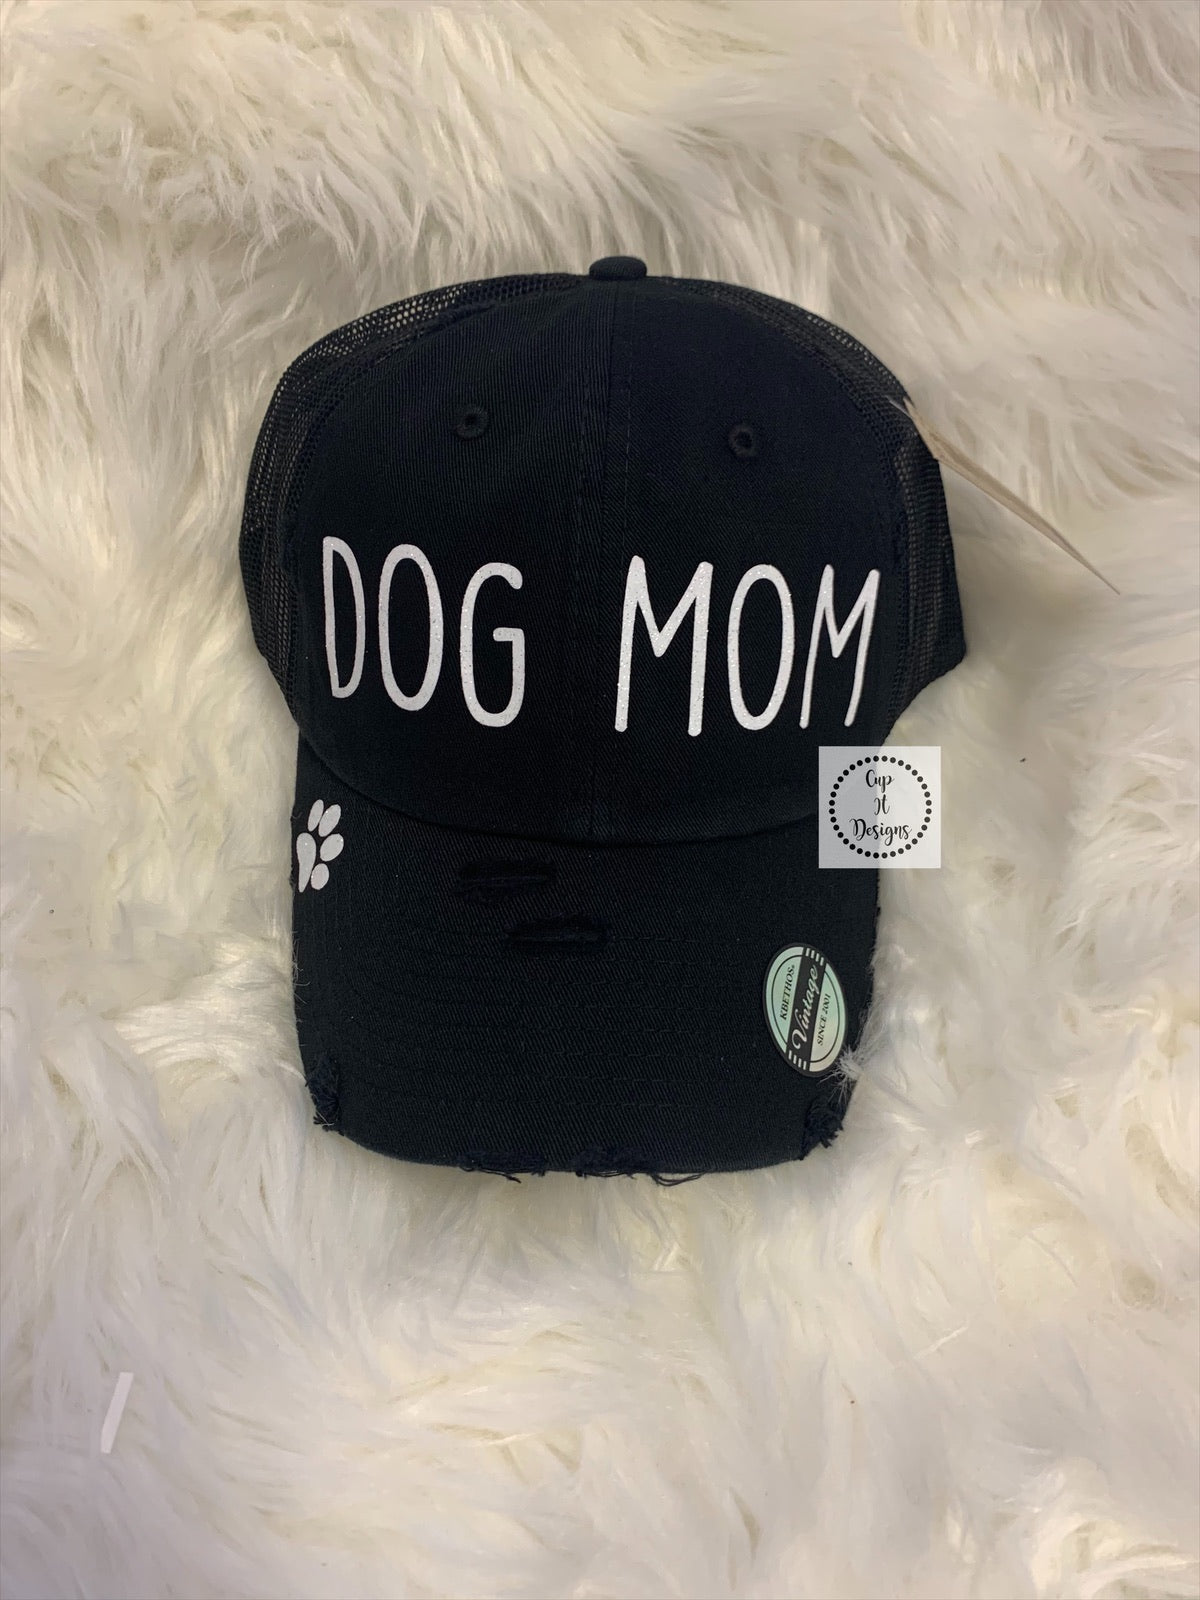 Distressed Black Dog Mom Hat